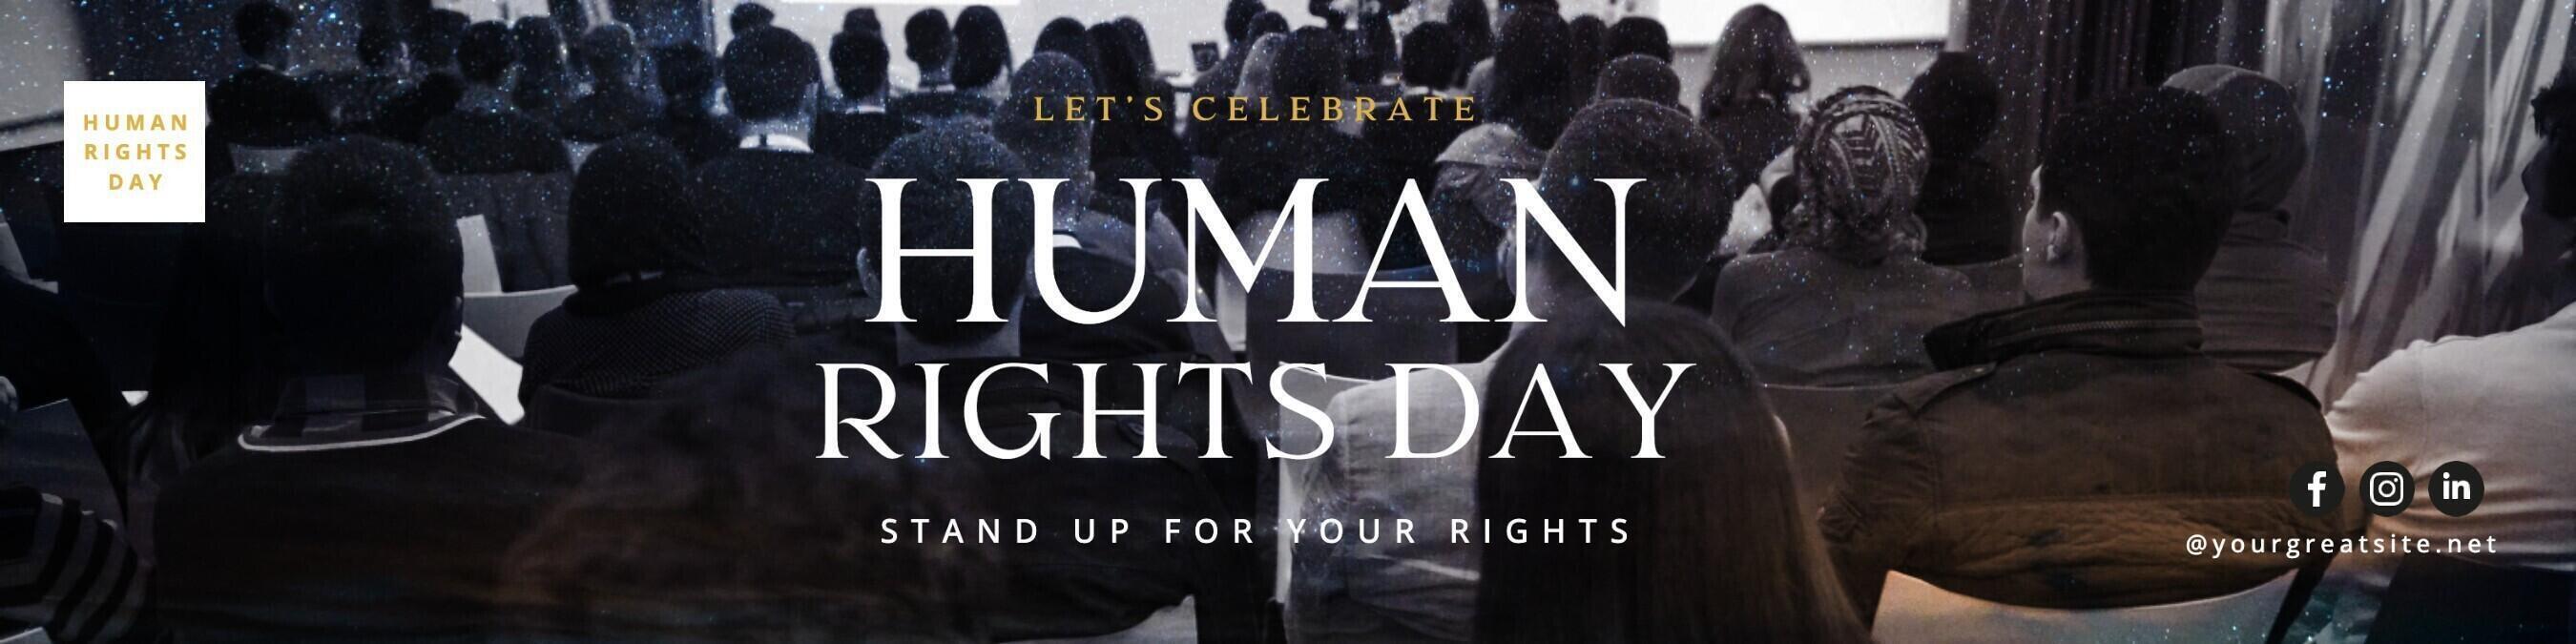 Human rights banner social media template